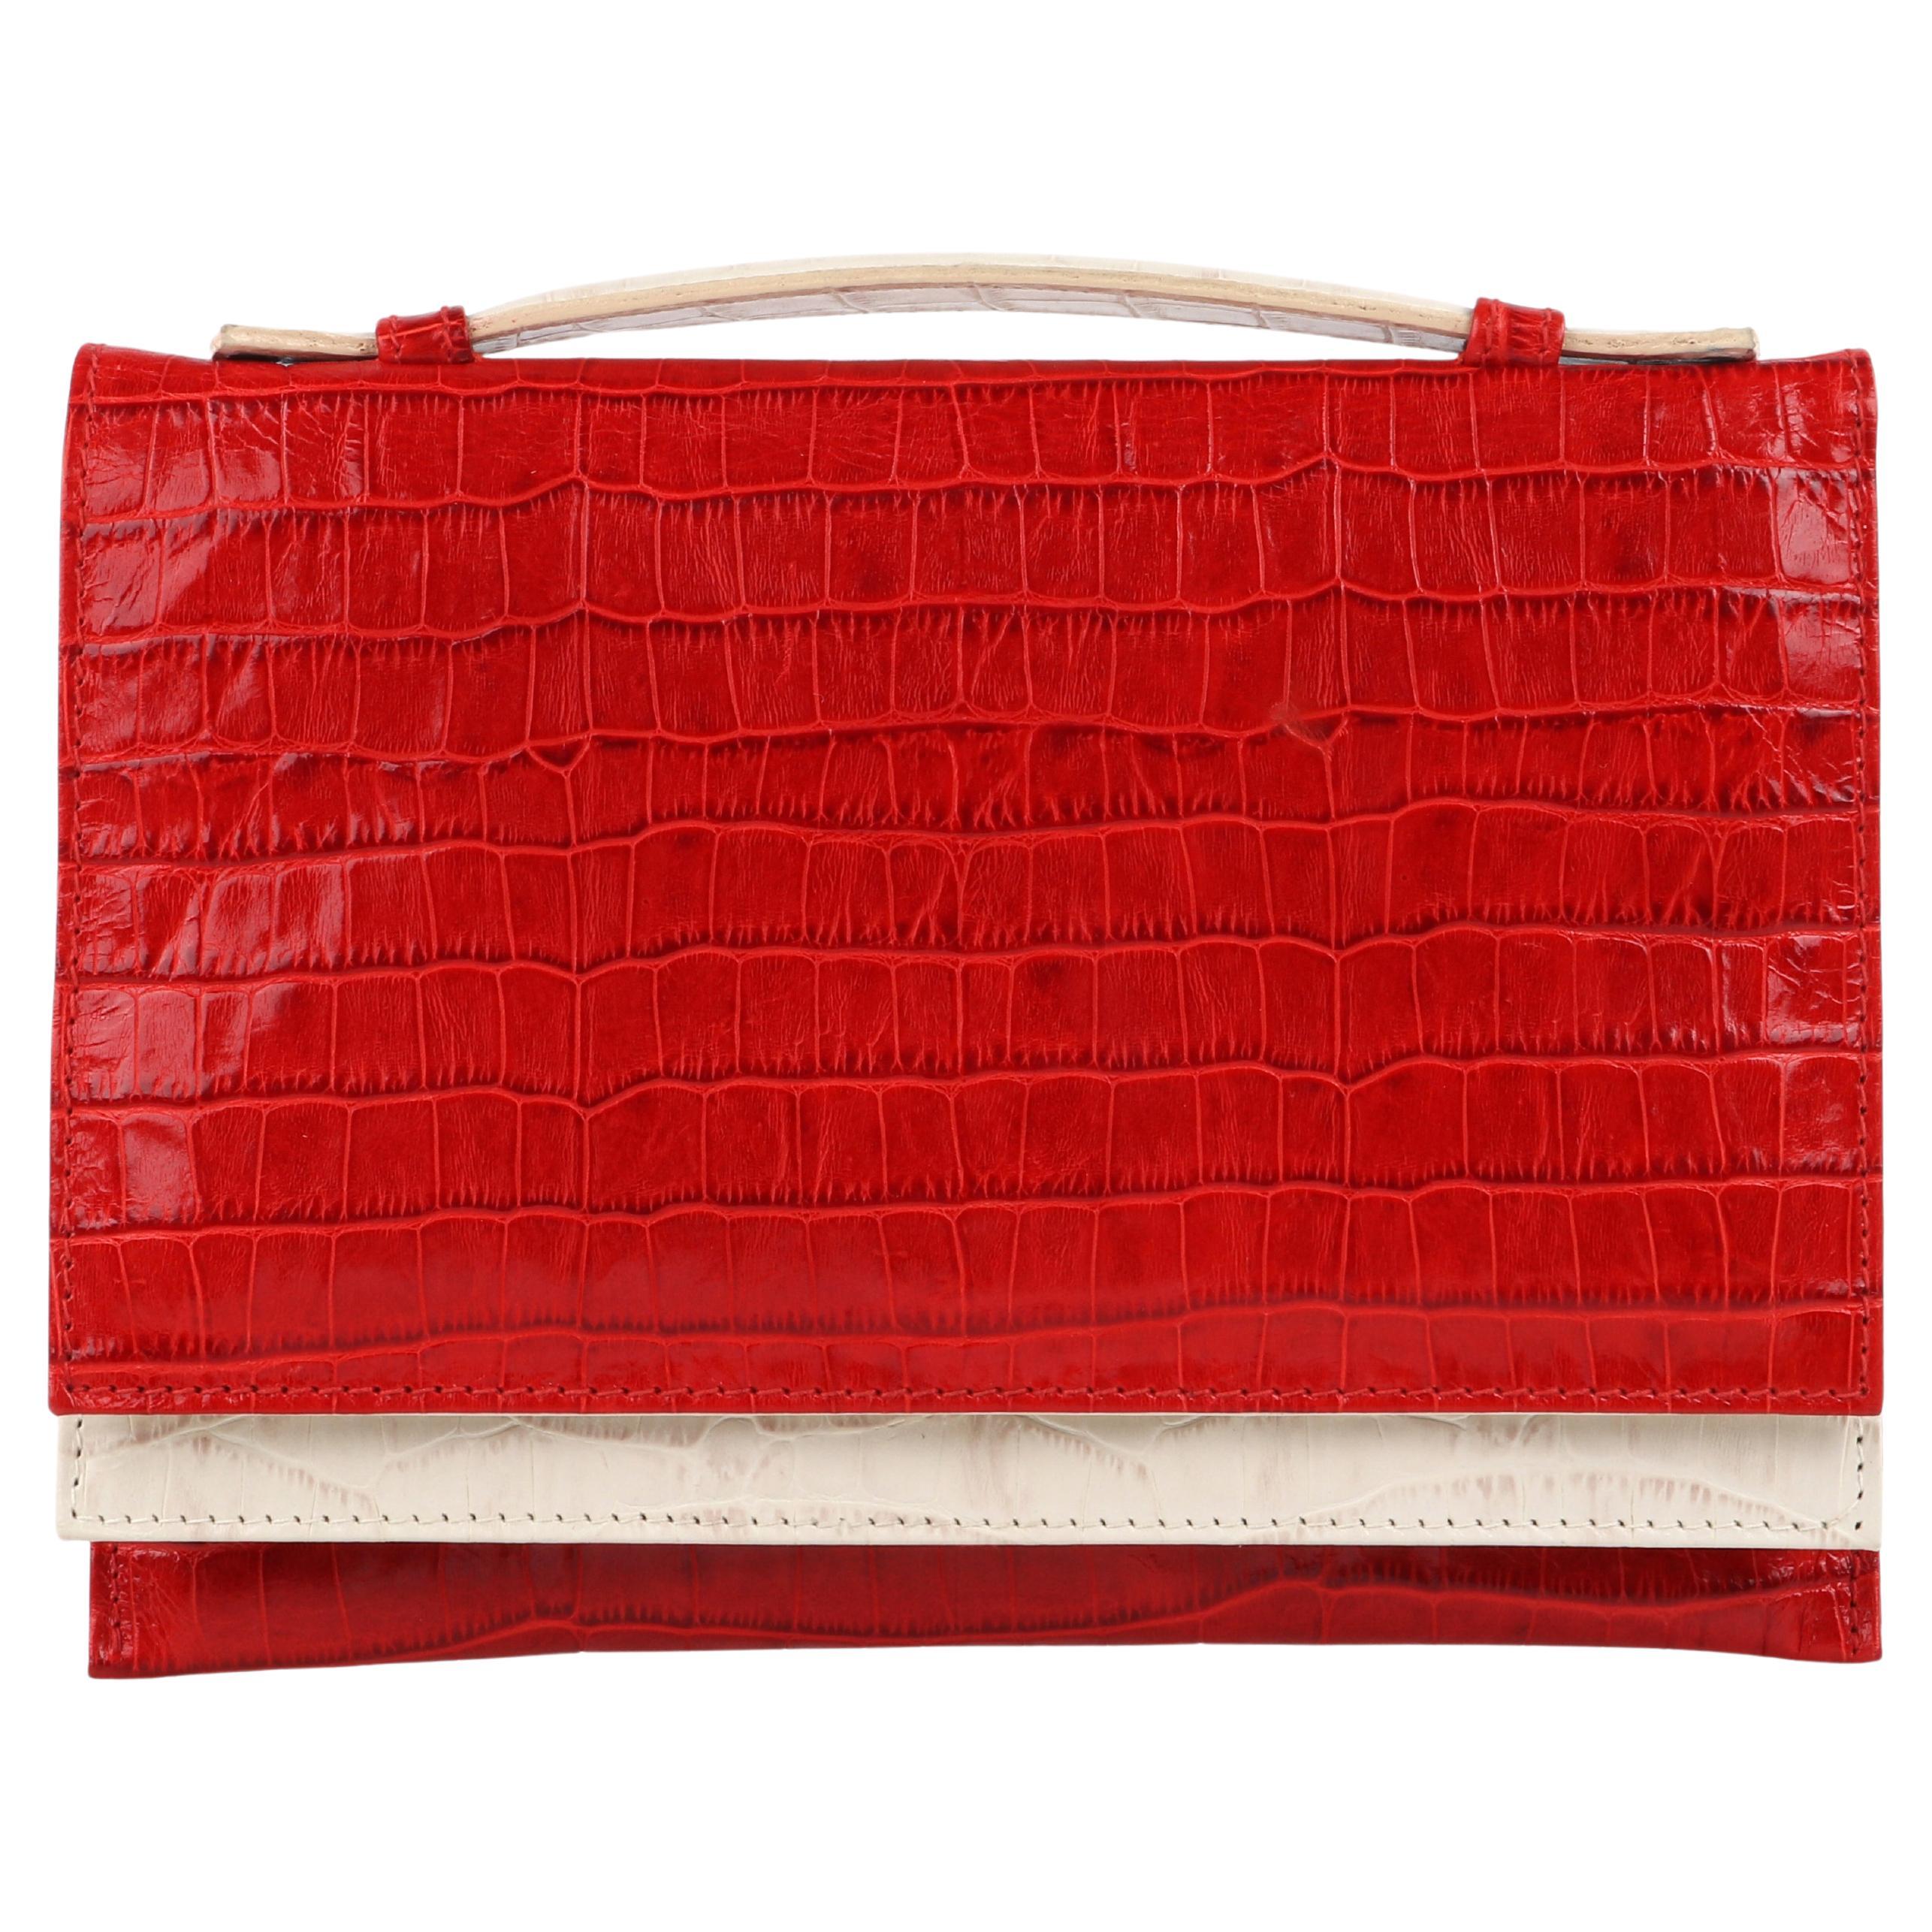 PONTINE PAUS c. 2008 Red Ivory Crocodile Leather Flap Fold Clutch Purse Bag RARE For Sale